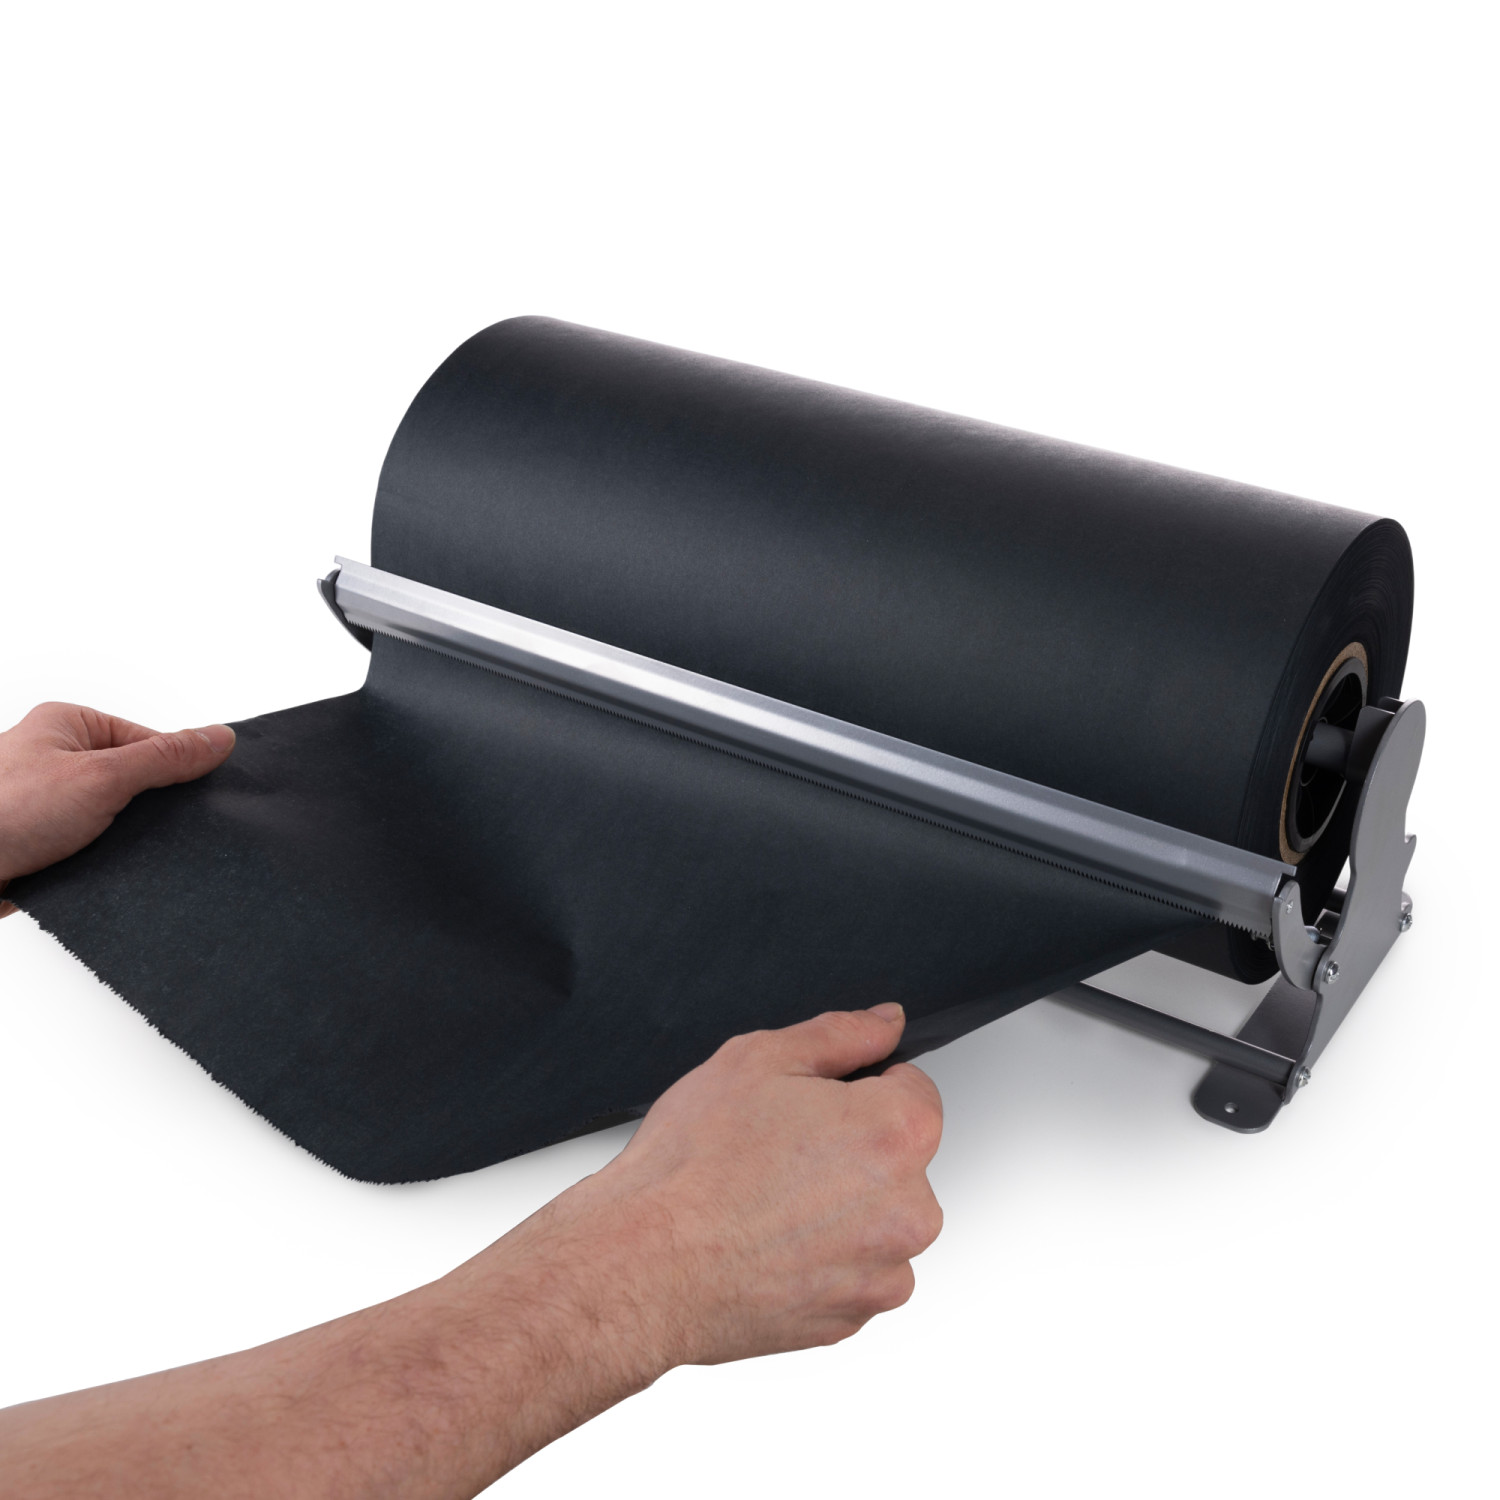 Black Tissue Paper Streamers - 20 Rolls